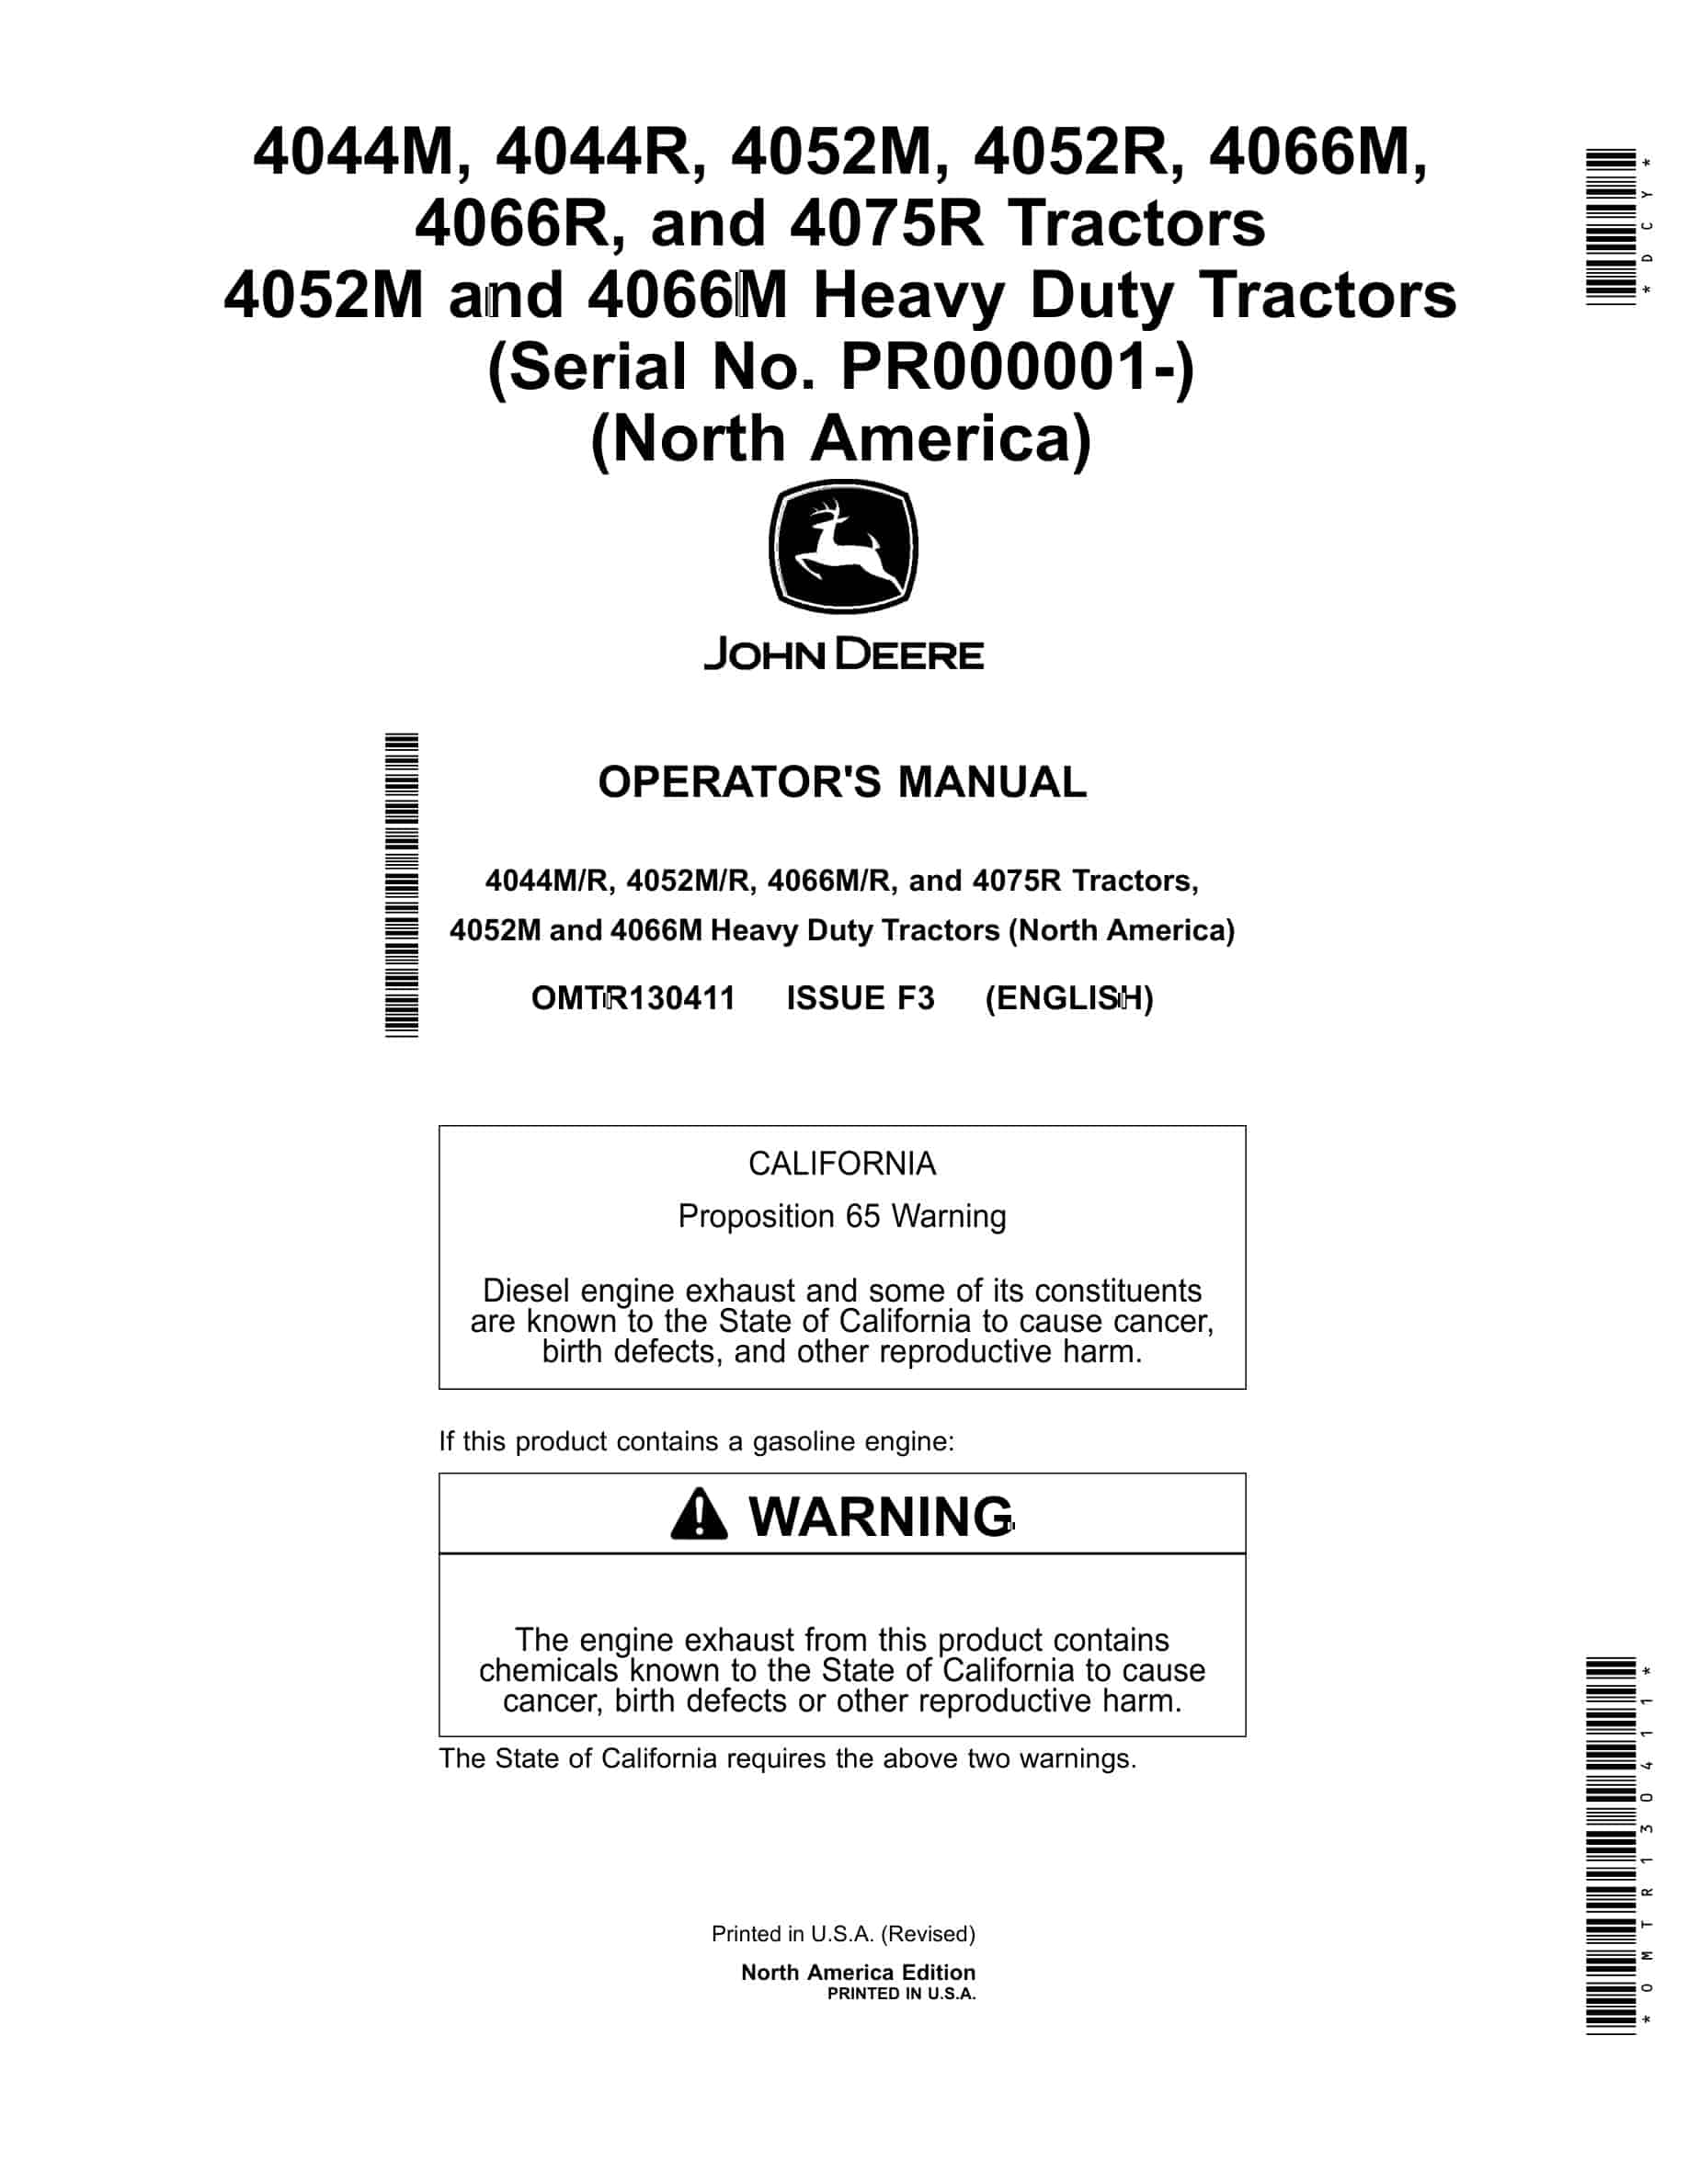 John Deere 4044m R, 4052m R, 4066m R, And 4075r Tractors, 4052m And 4066m Heavy Duty Tractors Operator Manuals OMTR130411-1